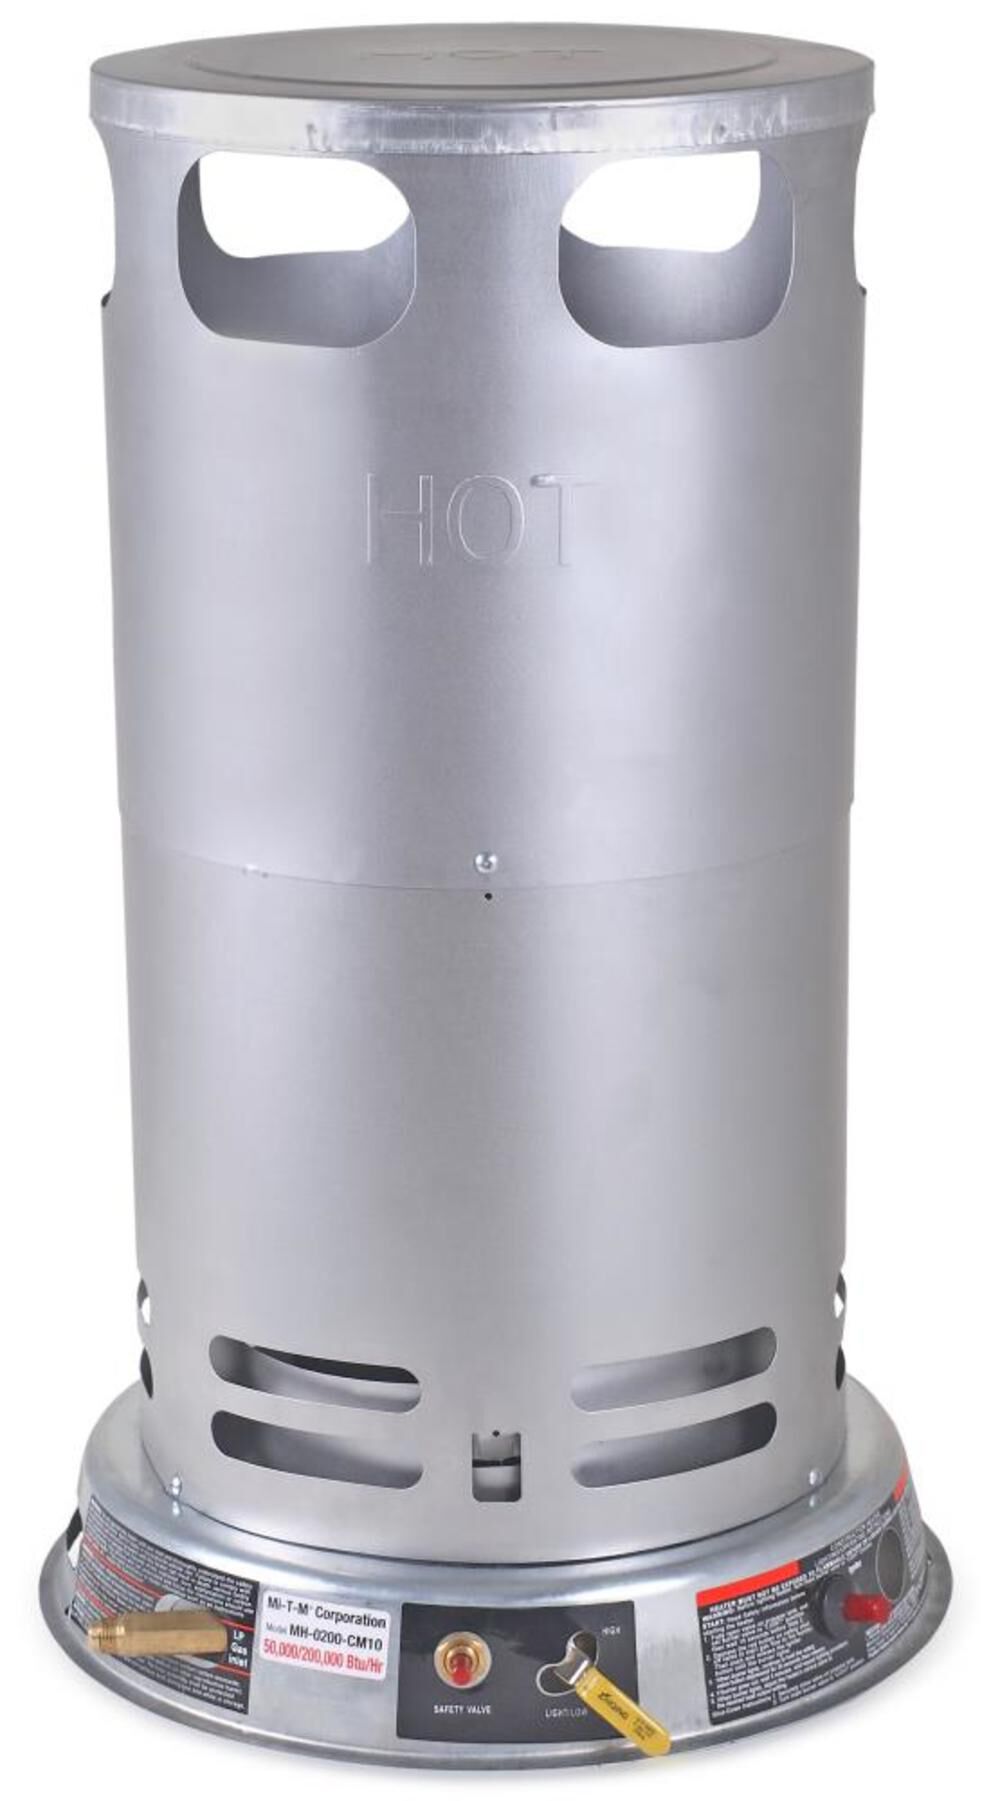 T M 200000 BTU Convection Heater - Propane MH-0200-CM10